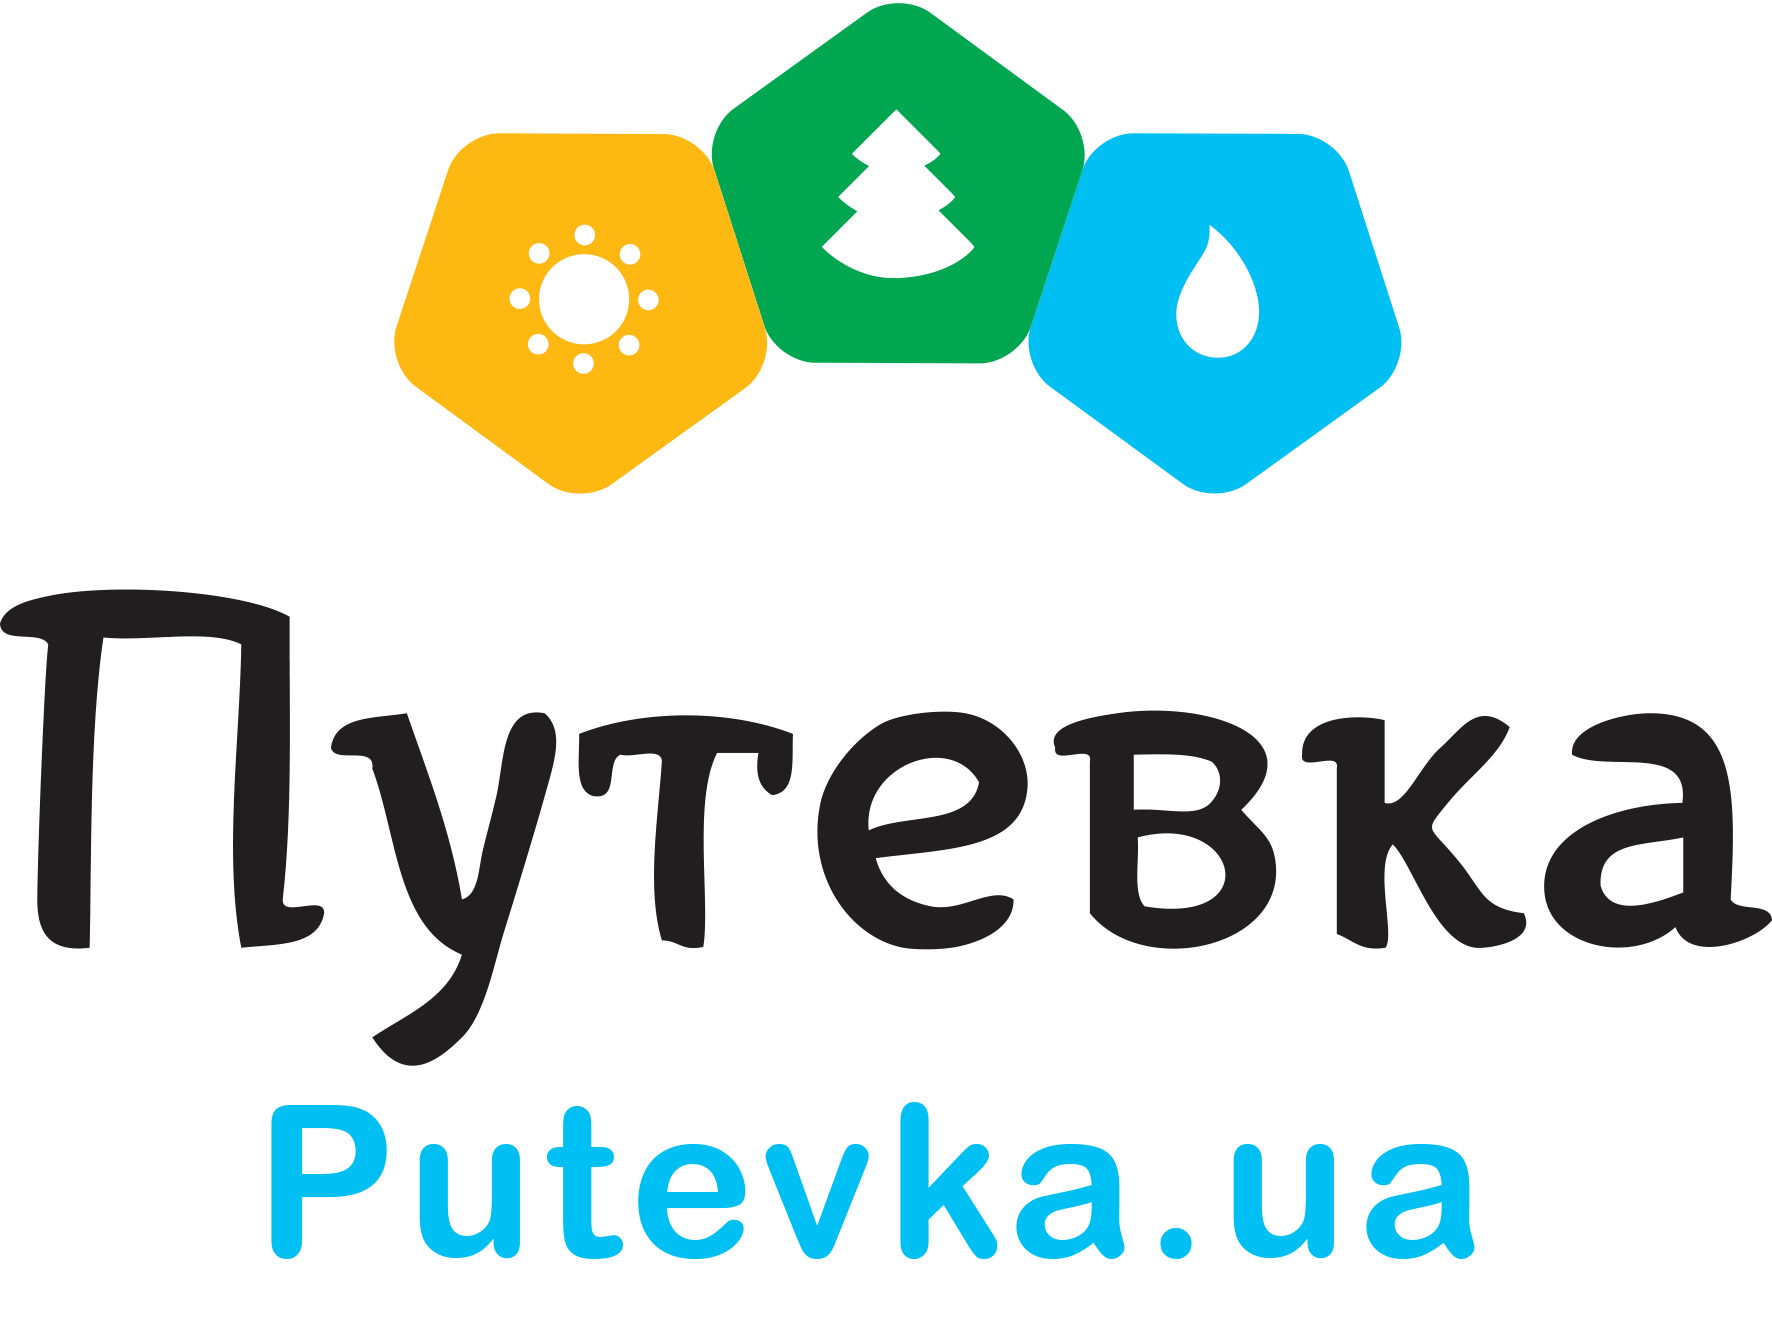 Кешбек в Putevka.ua до 1.50 %